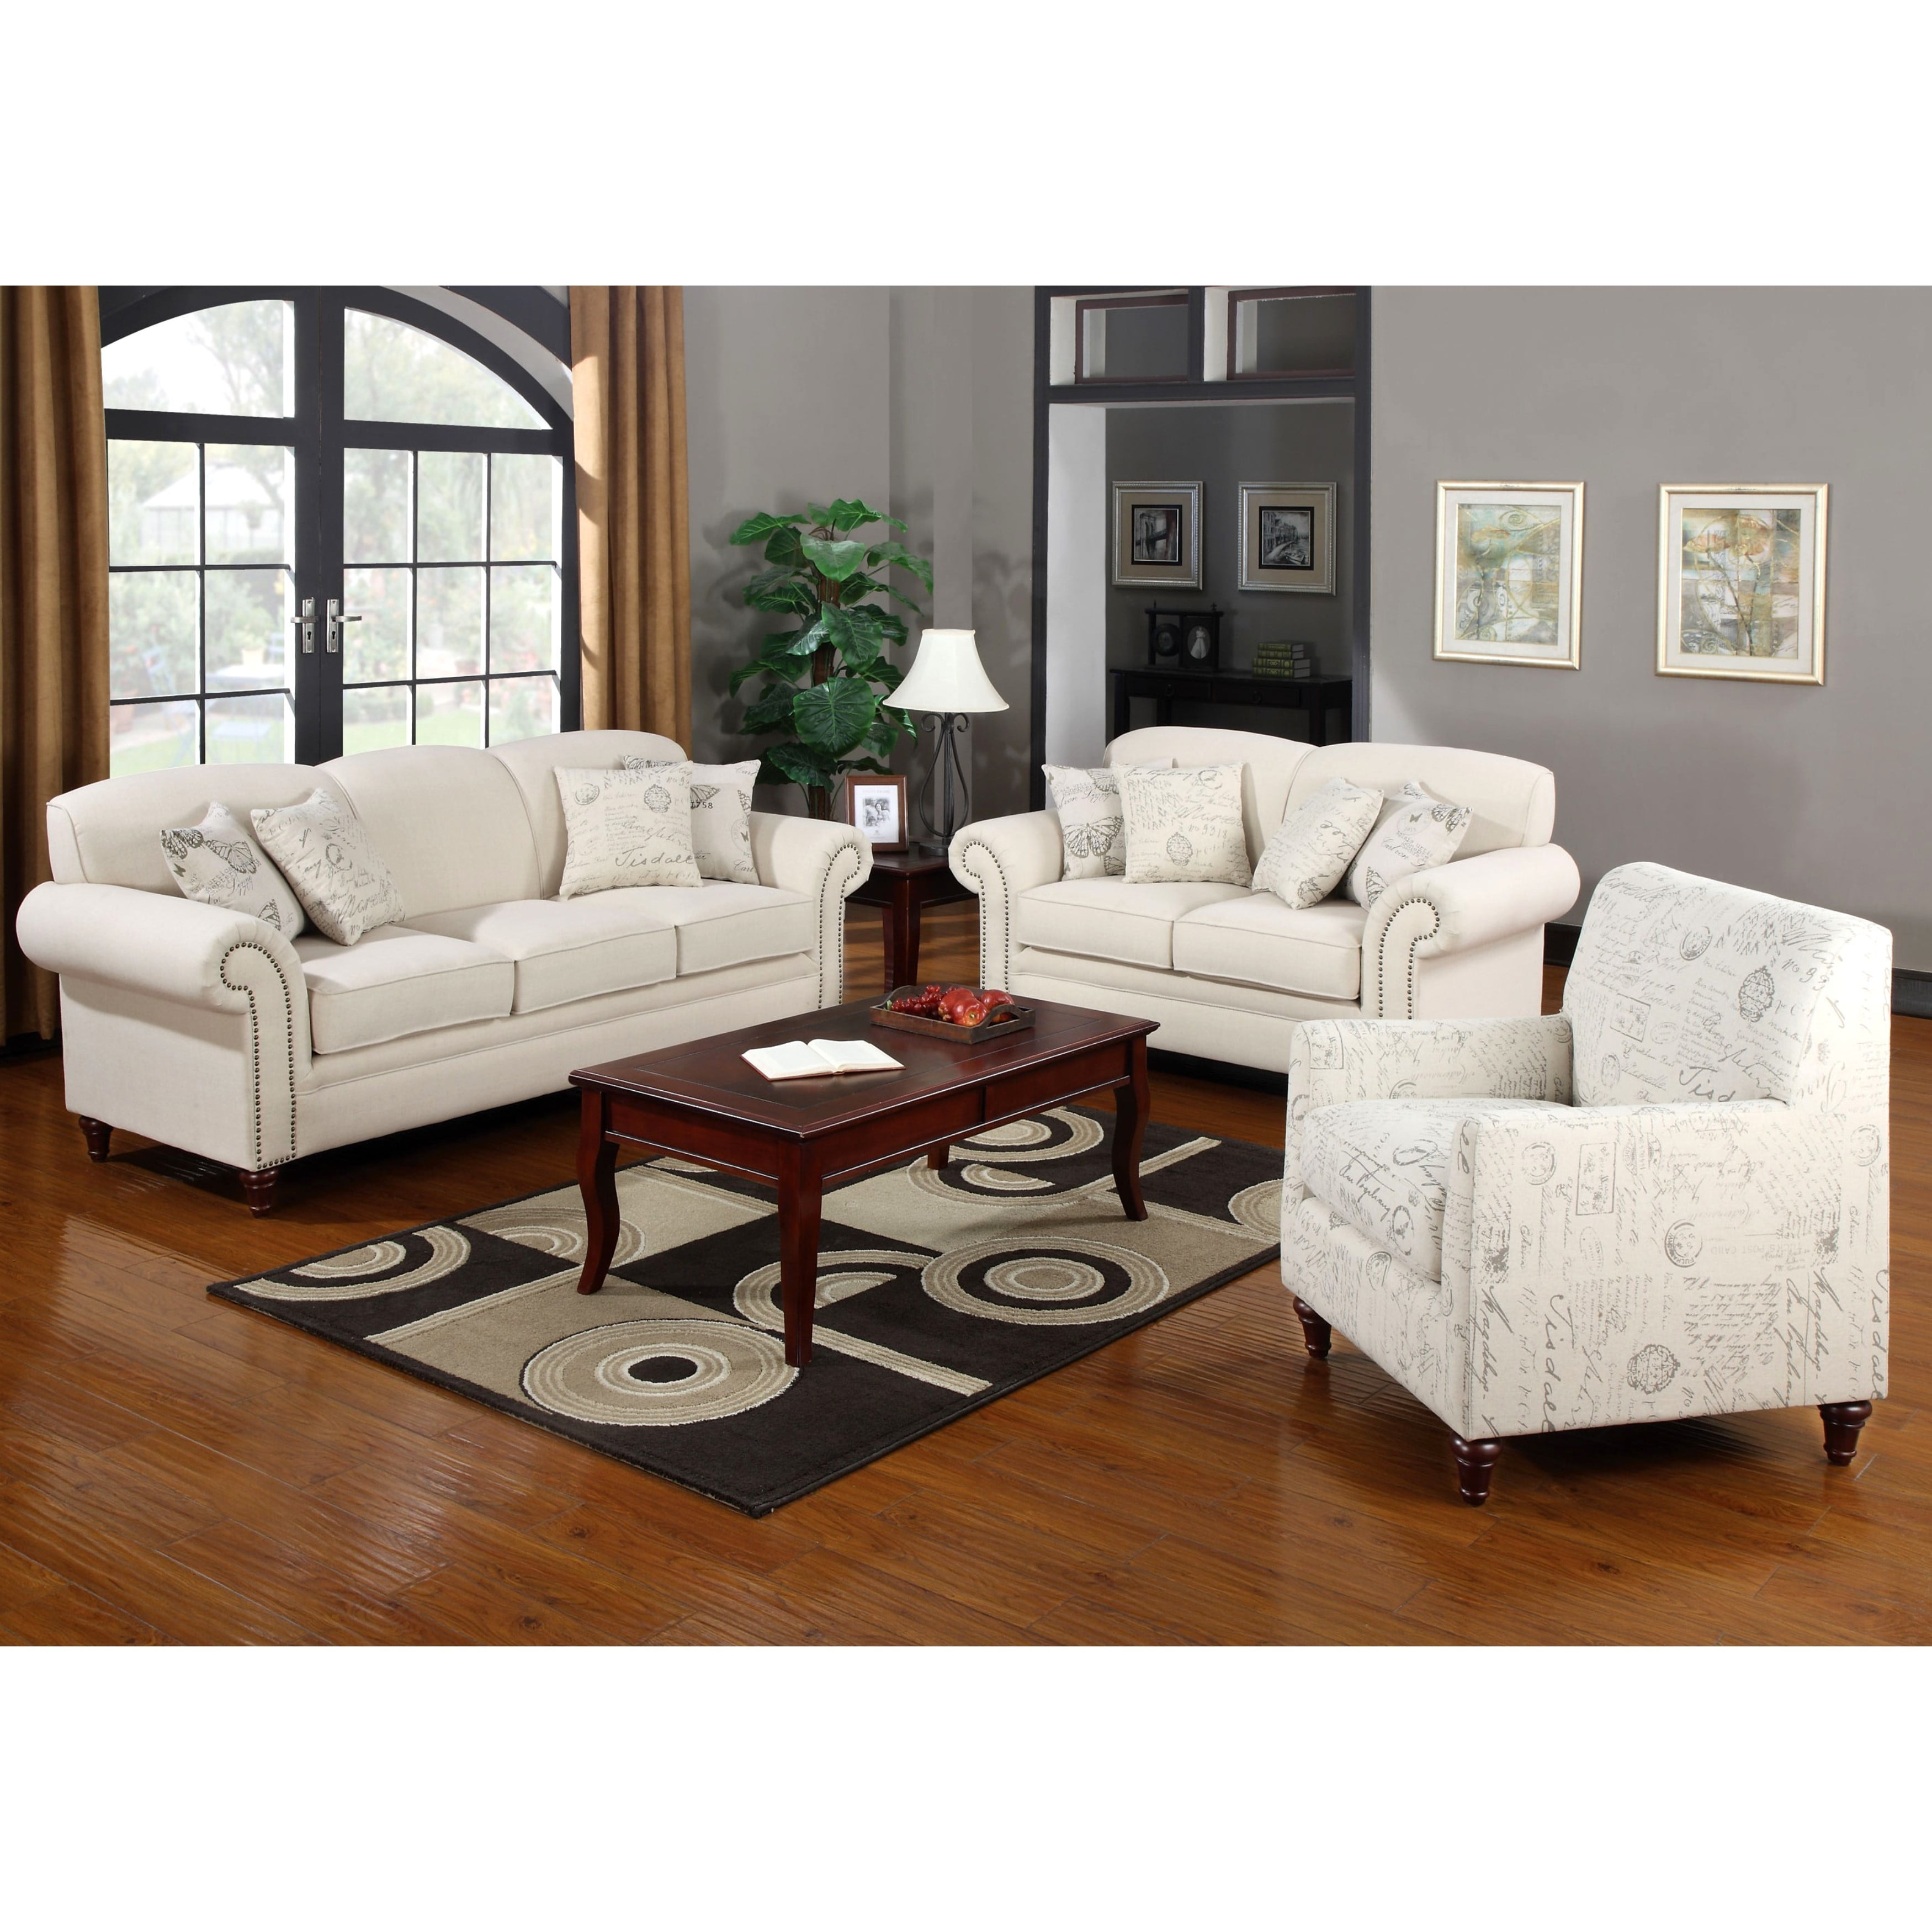 A Line Furniture French Traditional Design Living Room Sofa Collection With Nailhead Trim Walmartcom Walmartcom